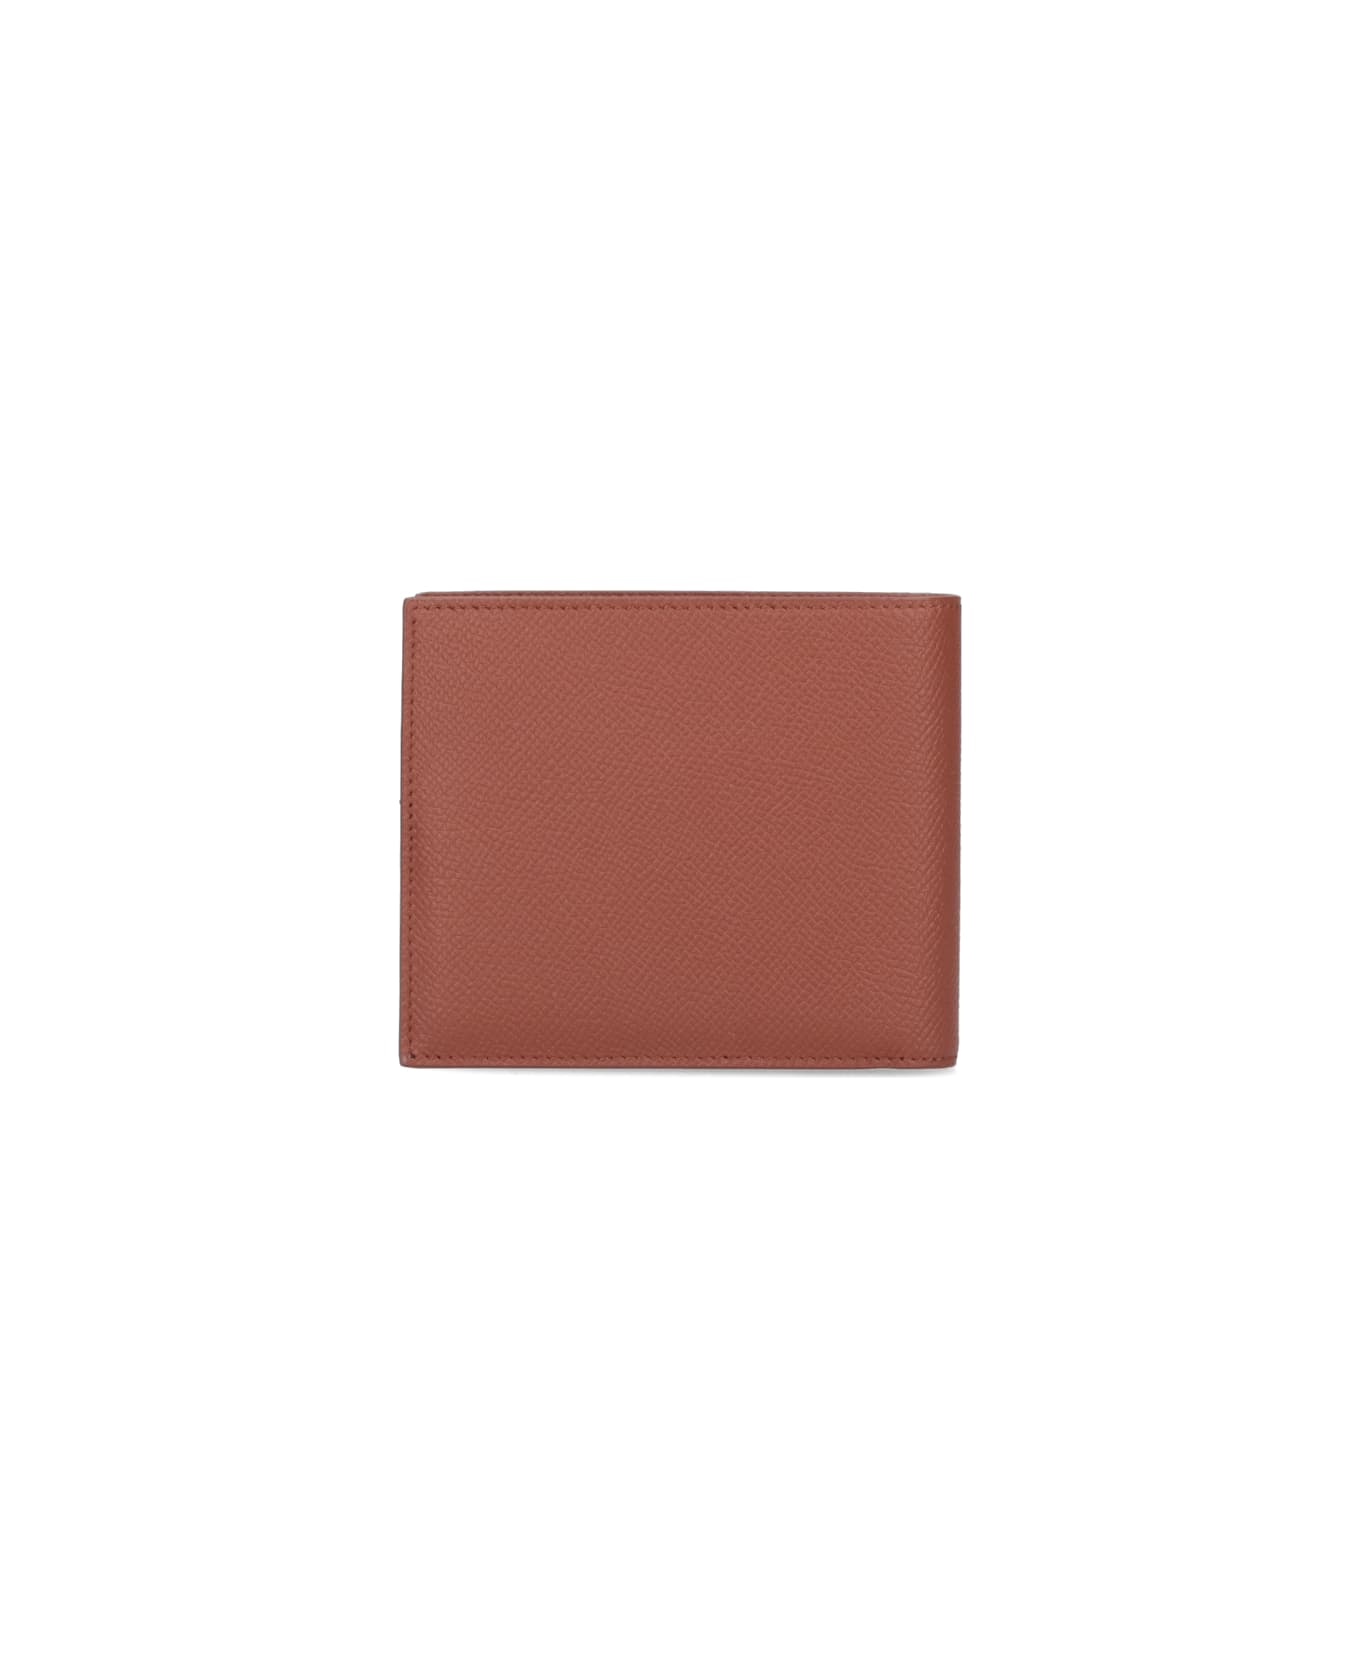 Ferragamo Bi-fold Wallet "gancini" - Brown